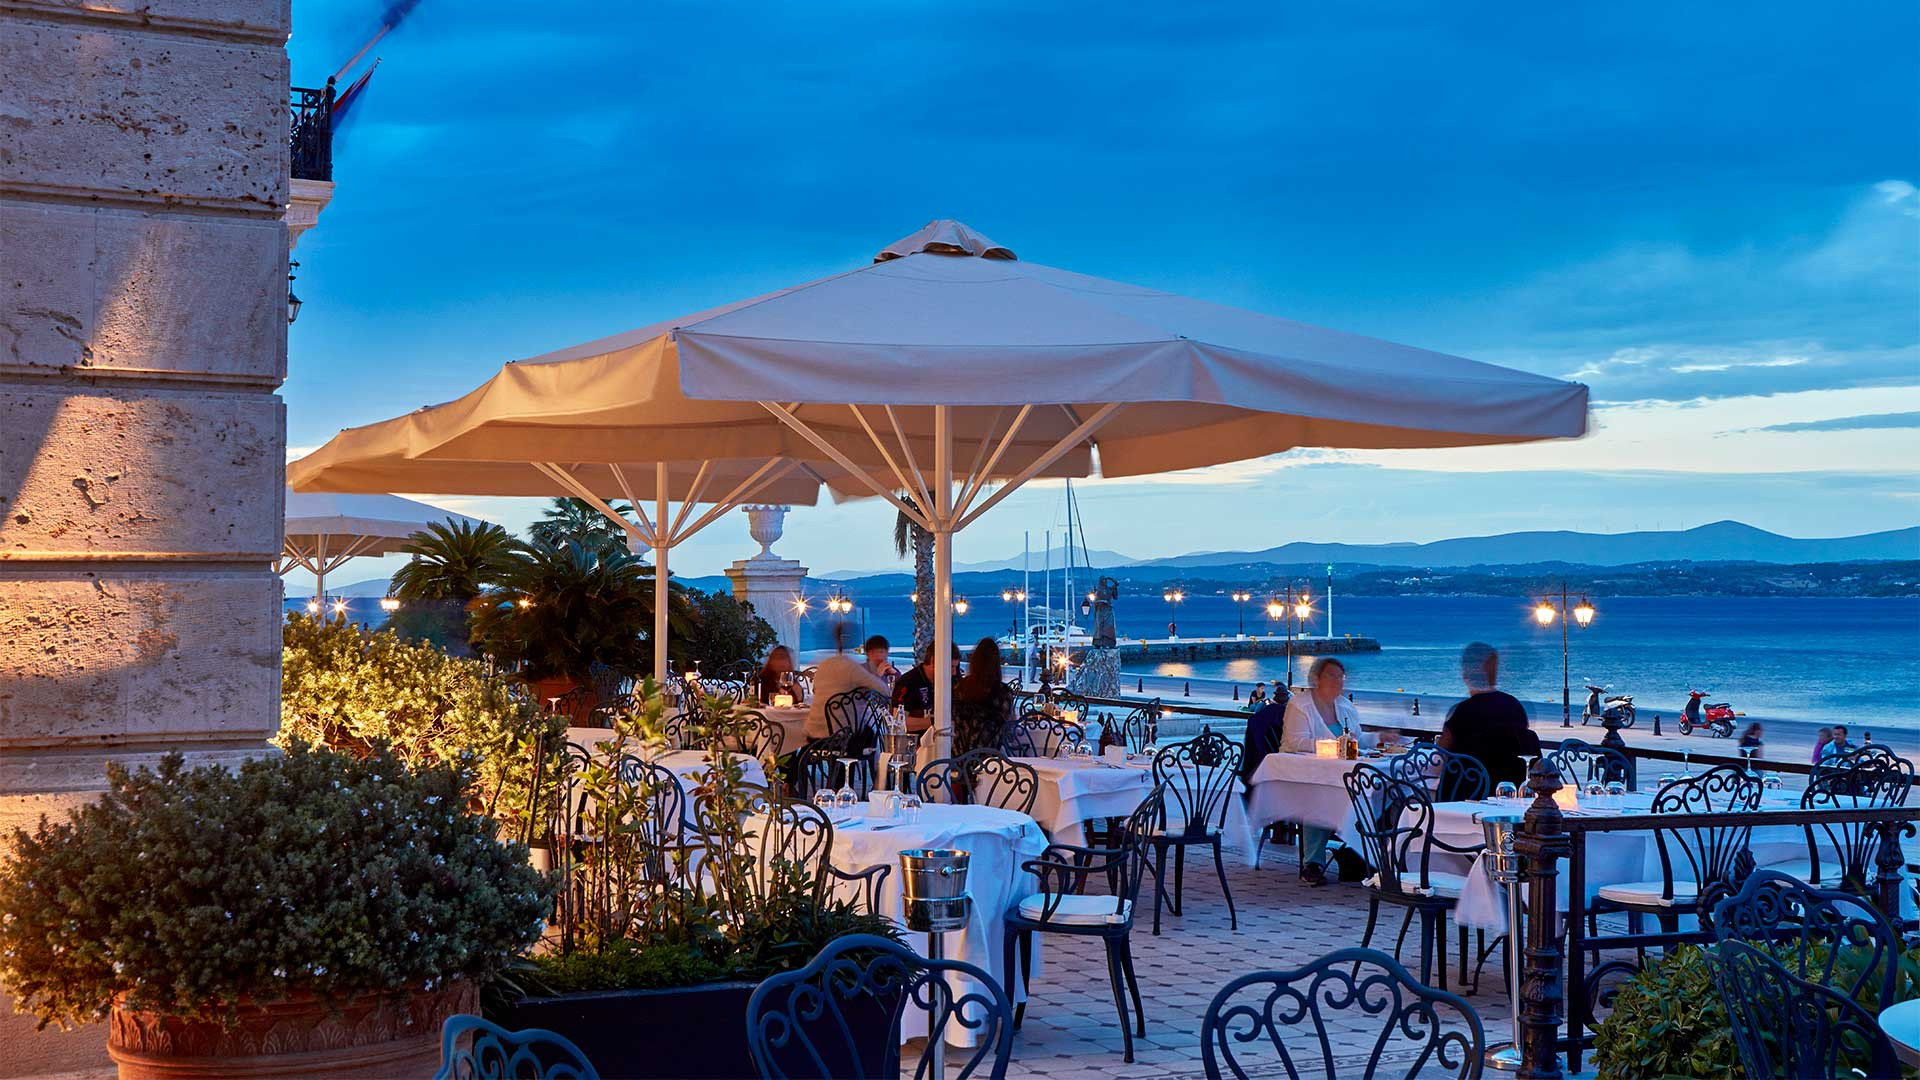 The Poseidonian Grand Hotel, Spetses island, Greece